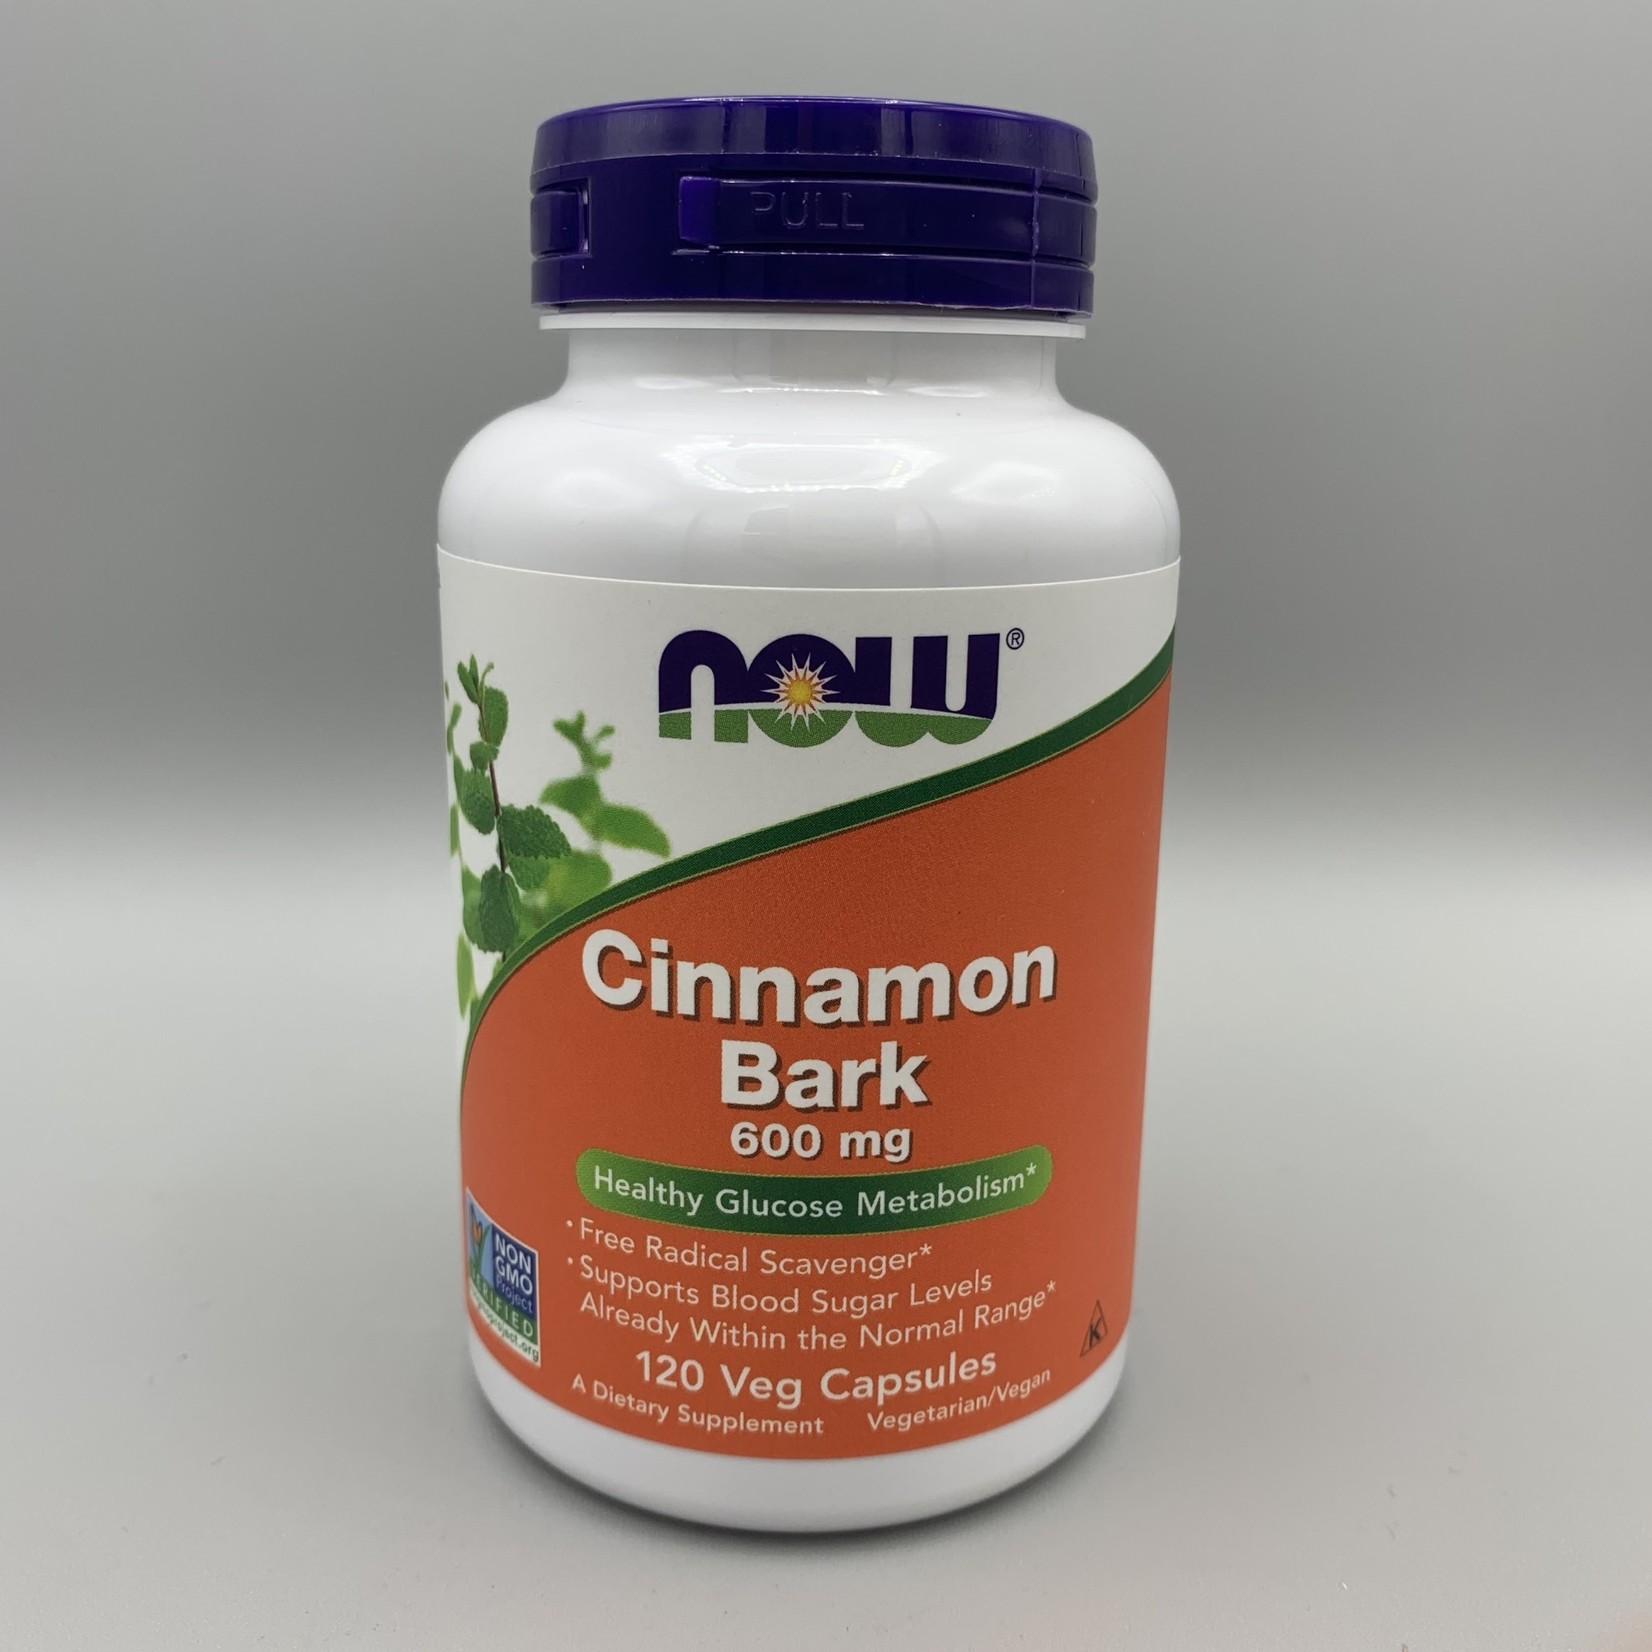 NOW NOW Cinnamon Bark - 600 mg, 120 Veg. Capsules